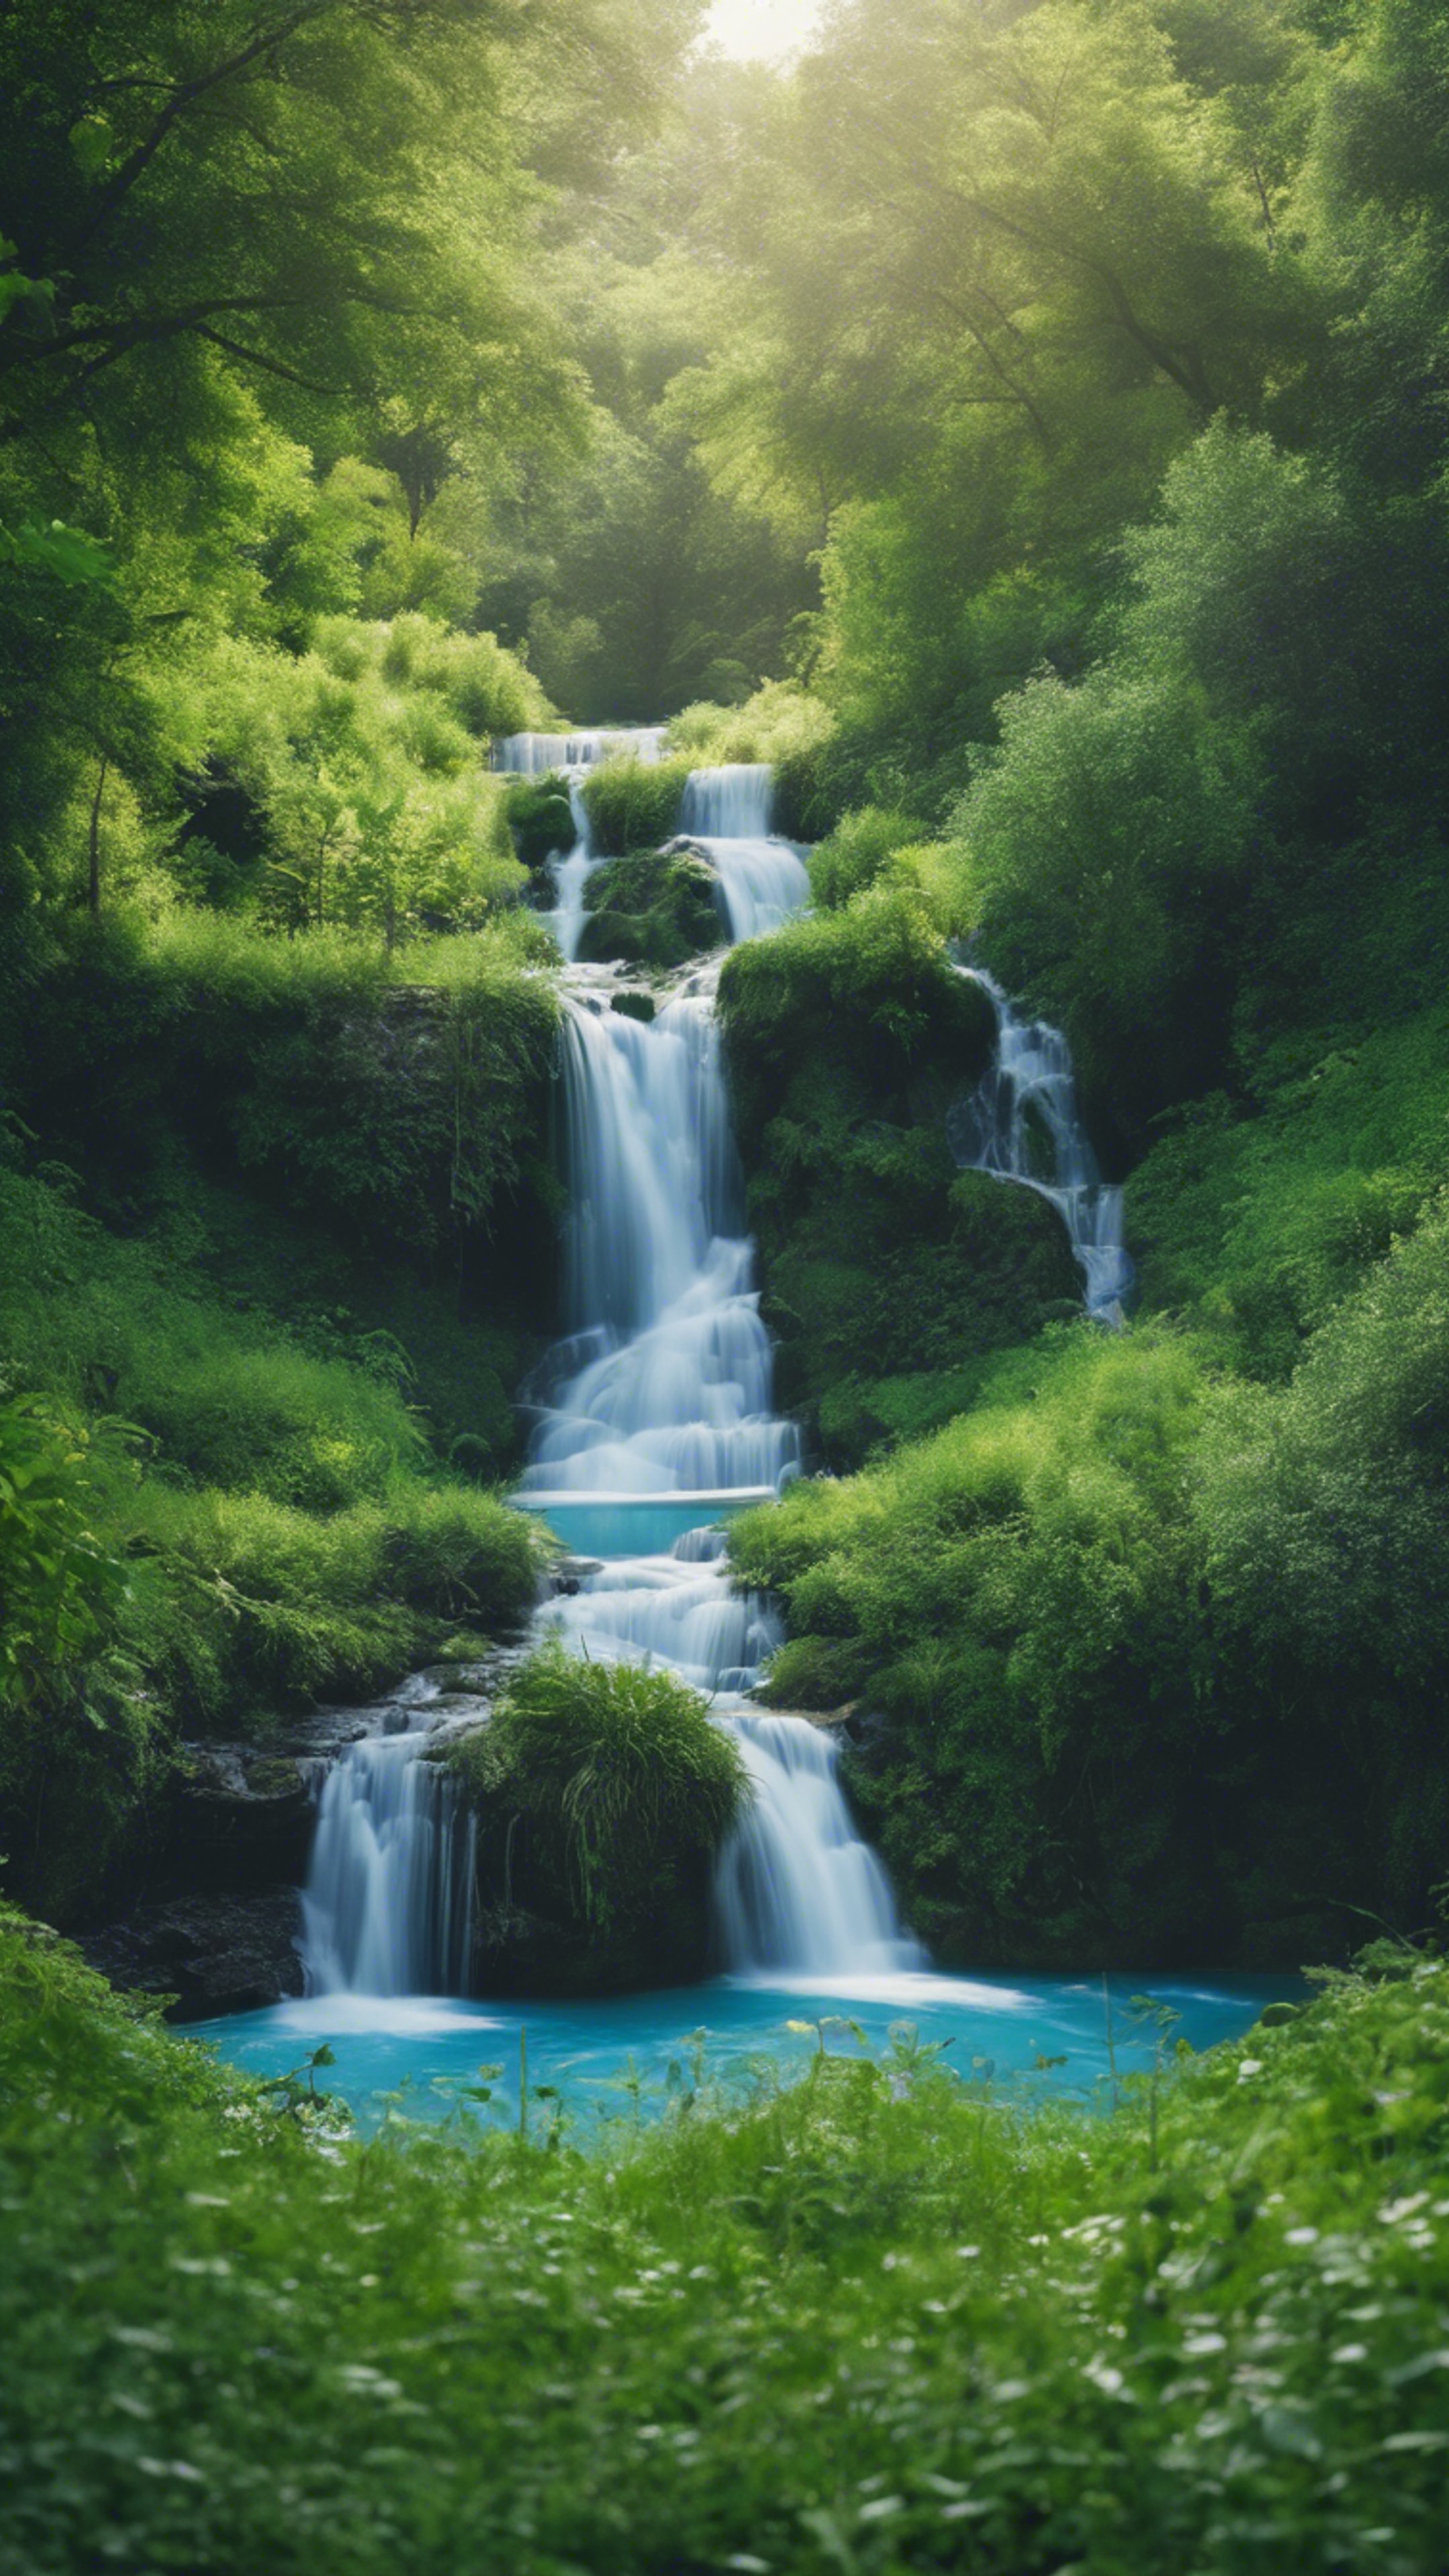 A cool blue waterfall cascading into a lush green meadow. Tapeta[661f80b9c31c460db5eb]